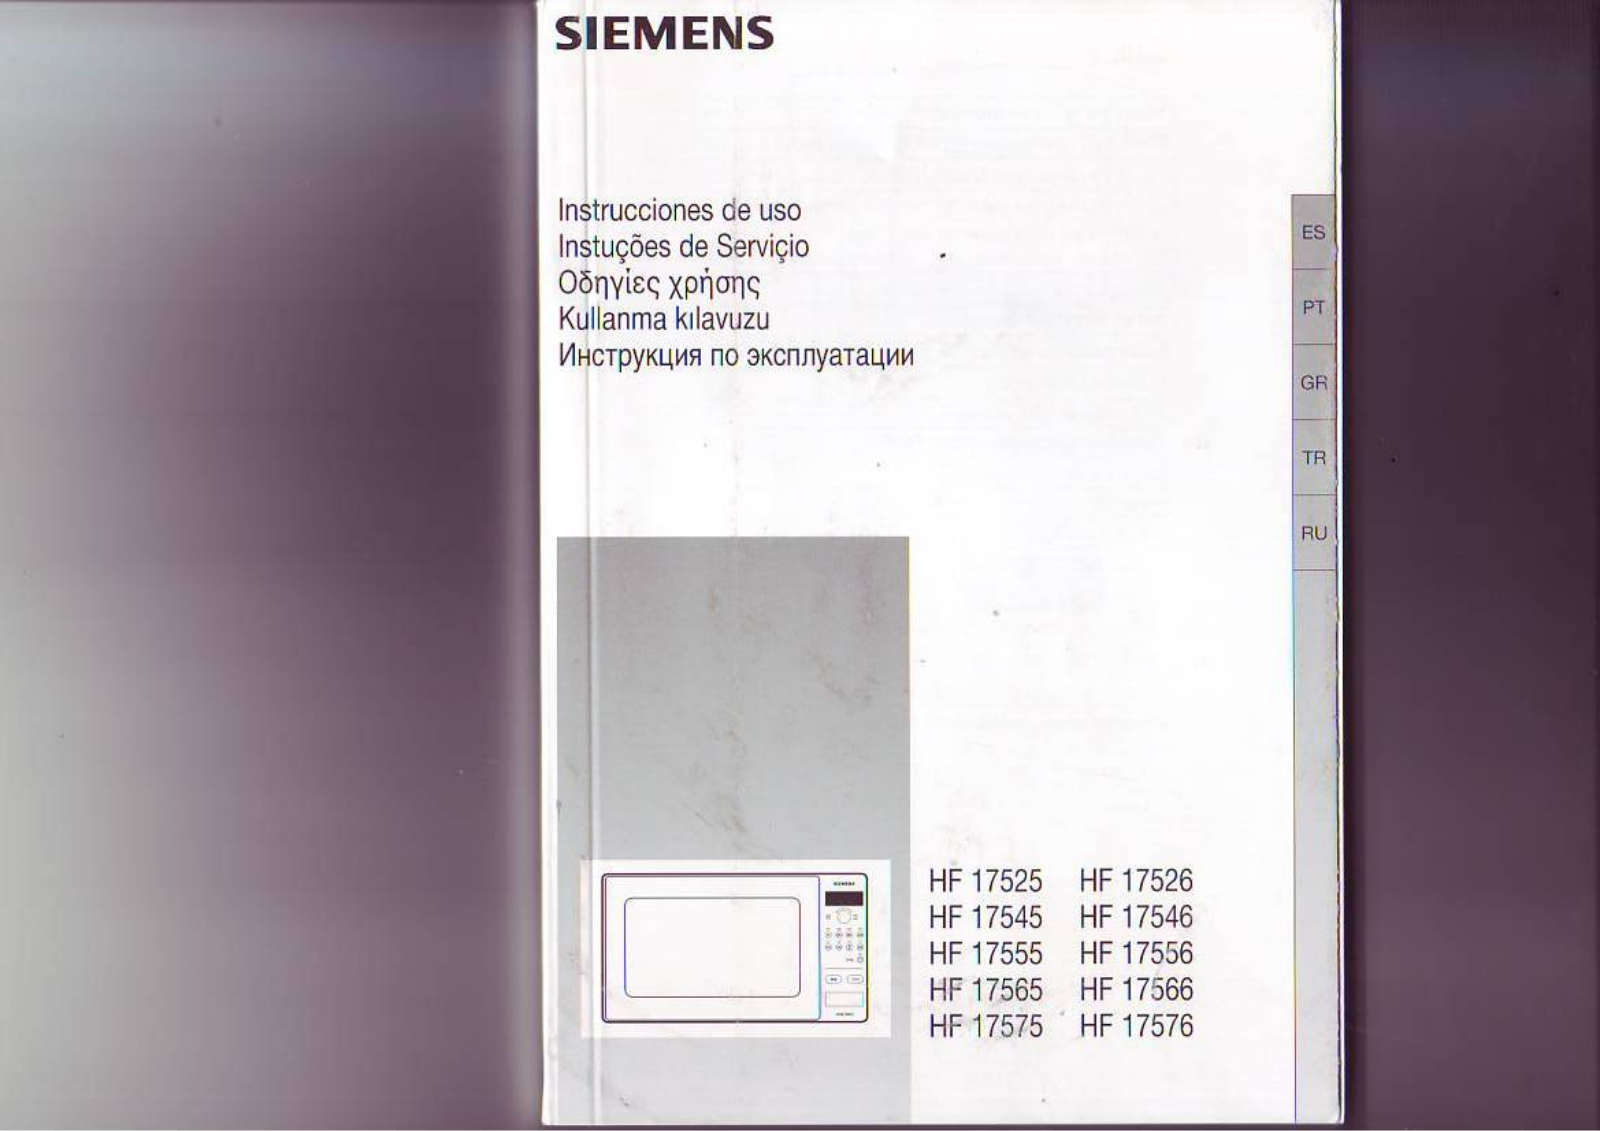 Siemens HF 17566 User Manual